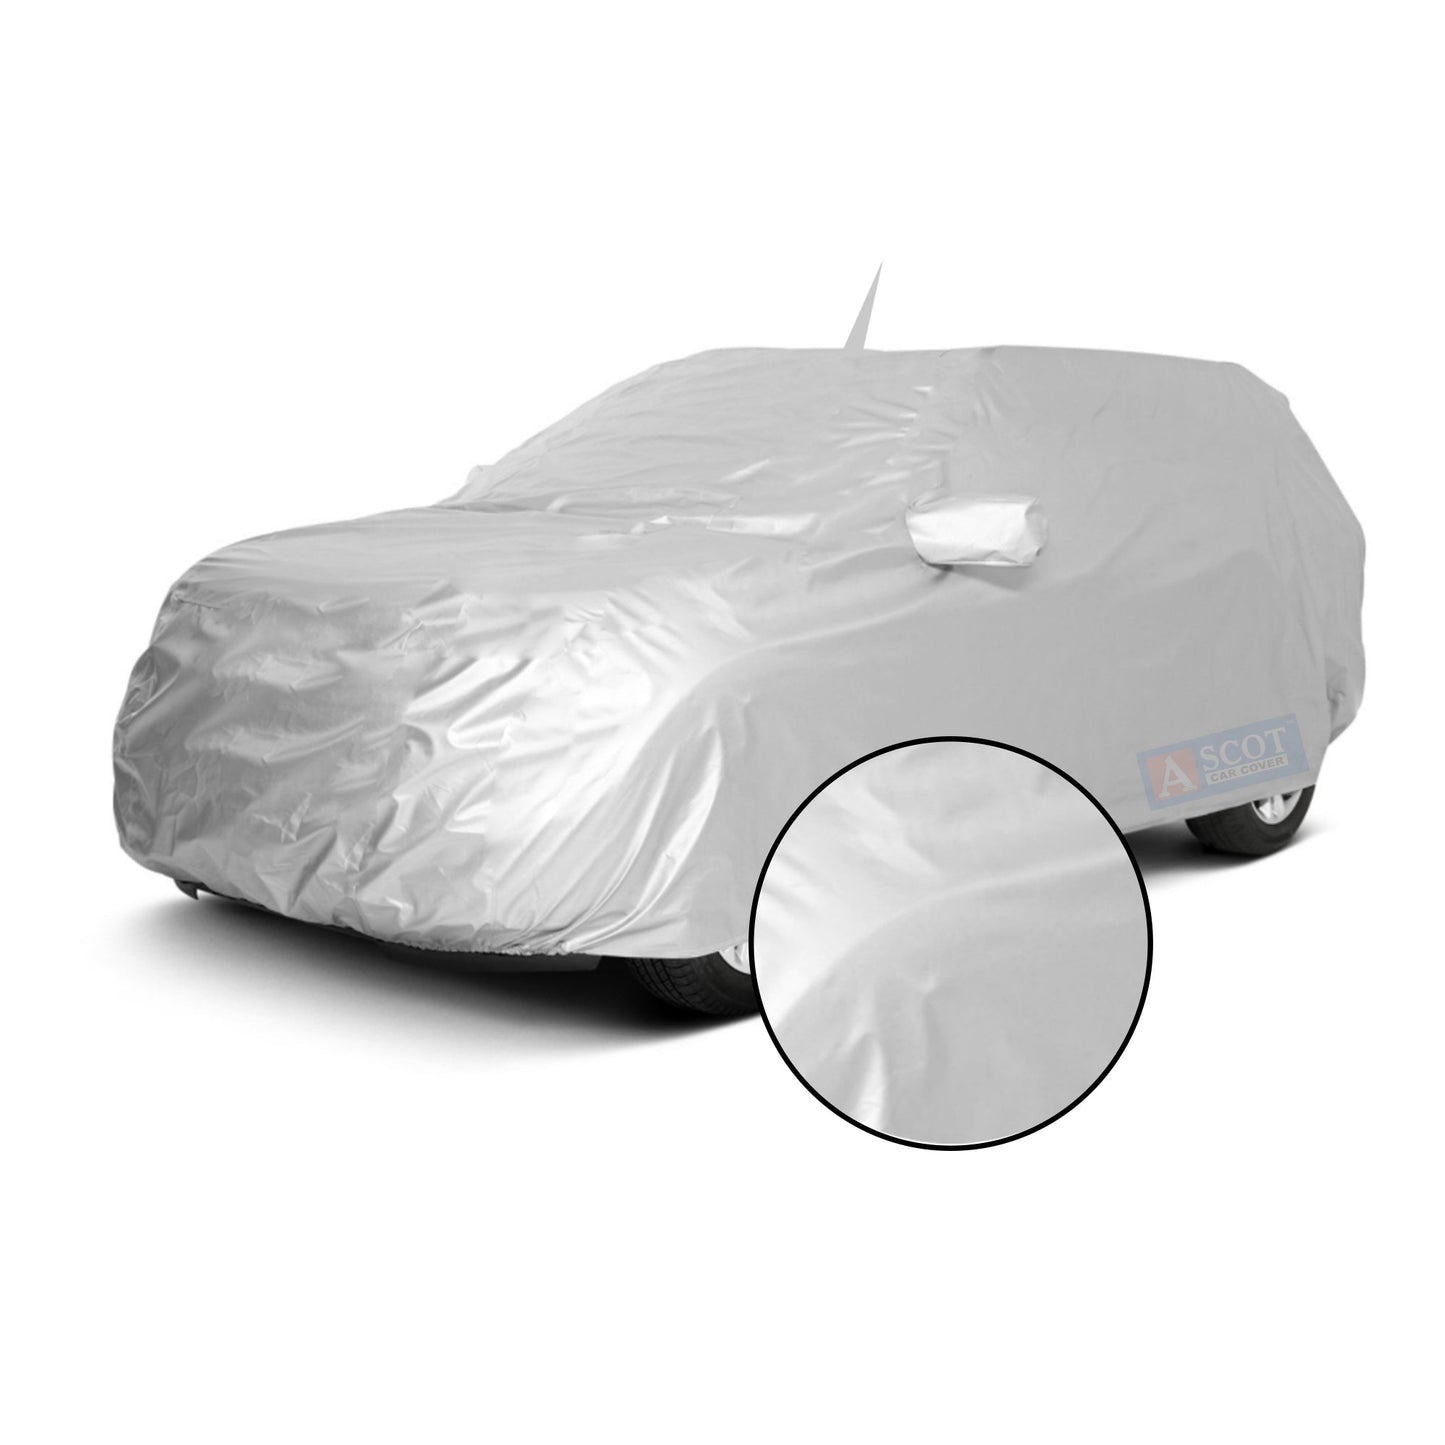 Ascot Maruti Suzuki Wagonr 1999-2009 Model Car Body Cover Dust Proof, Trippel Stitched